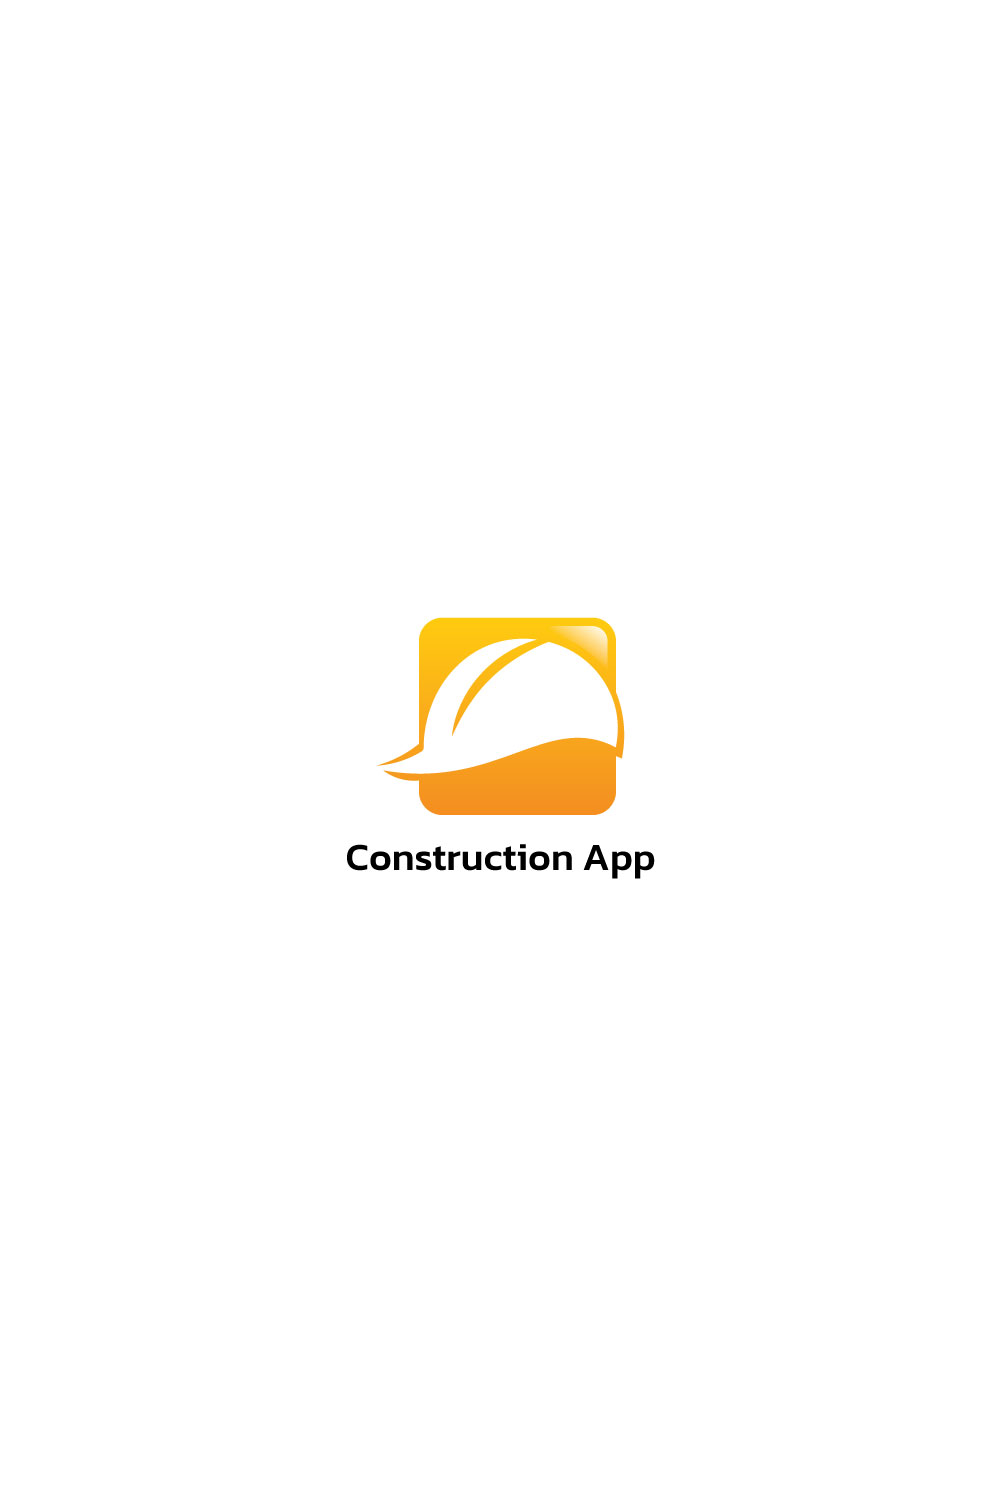 Professional Construction App Logo design pinterest preview image.